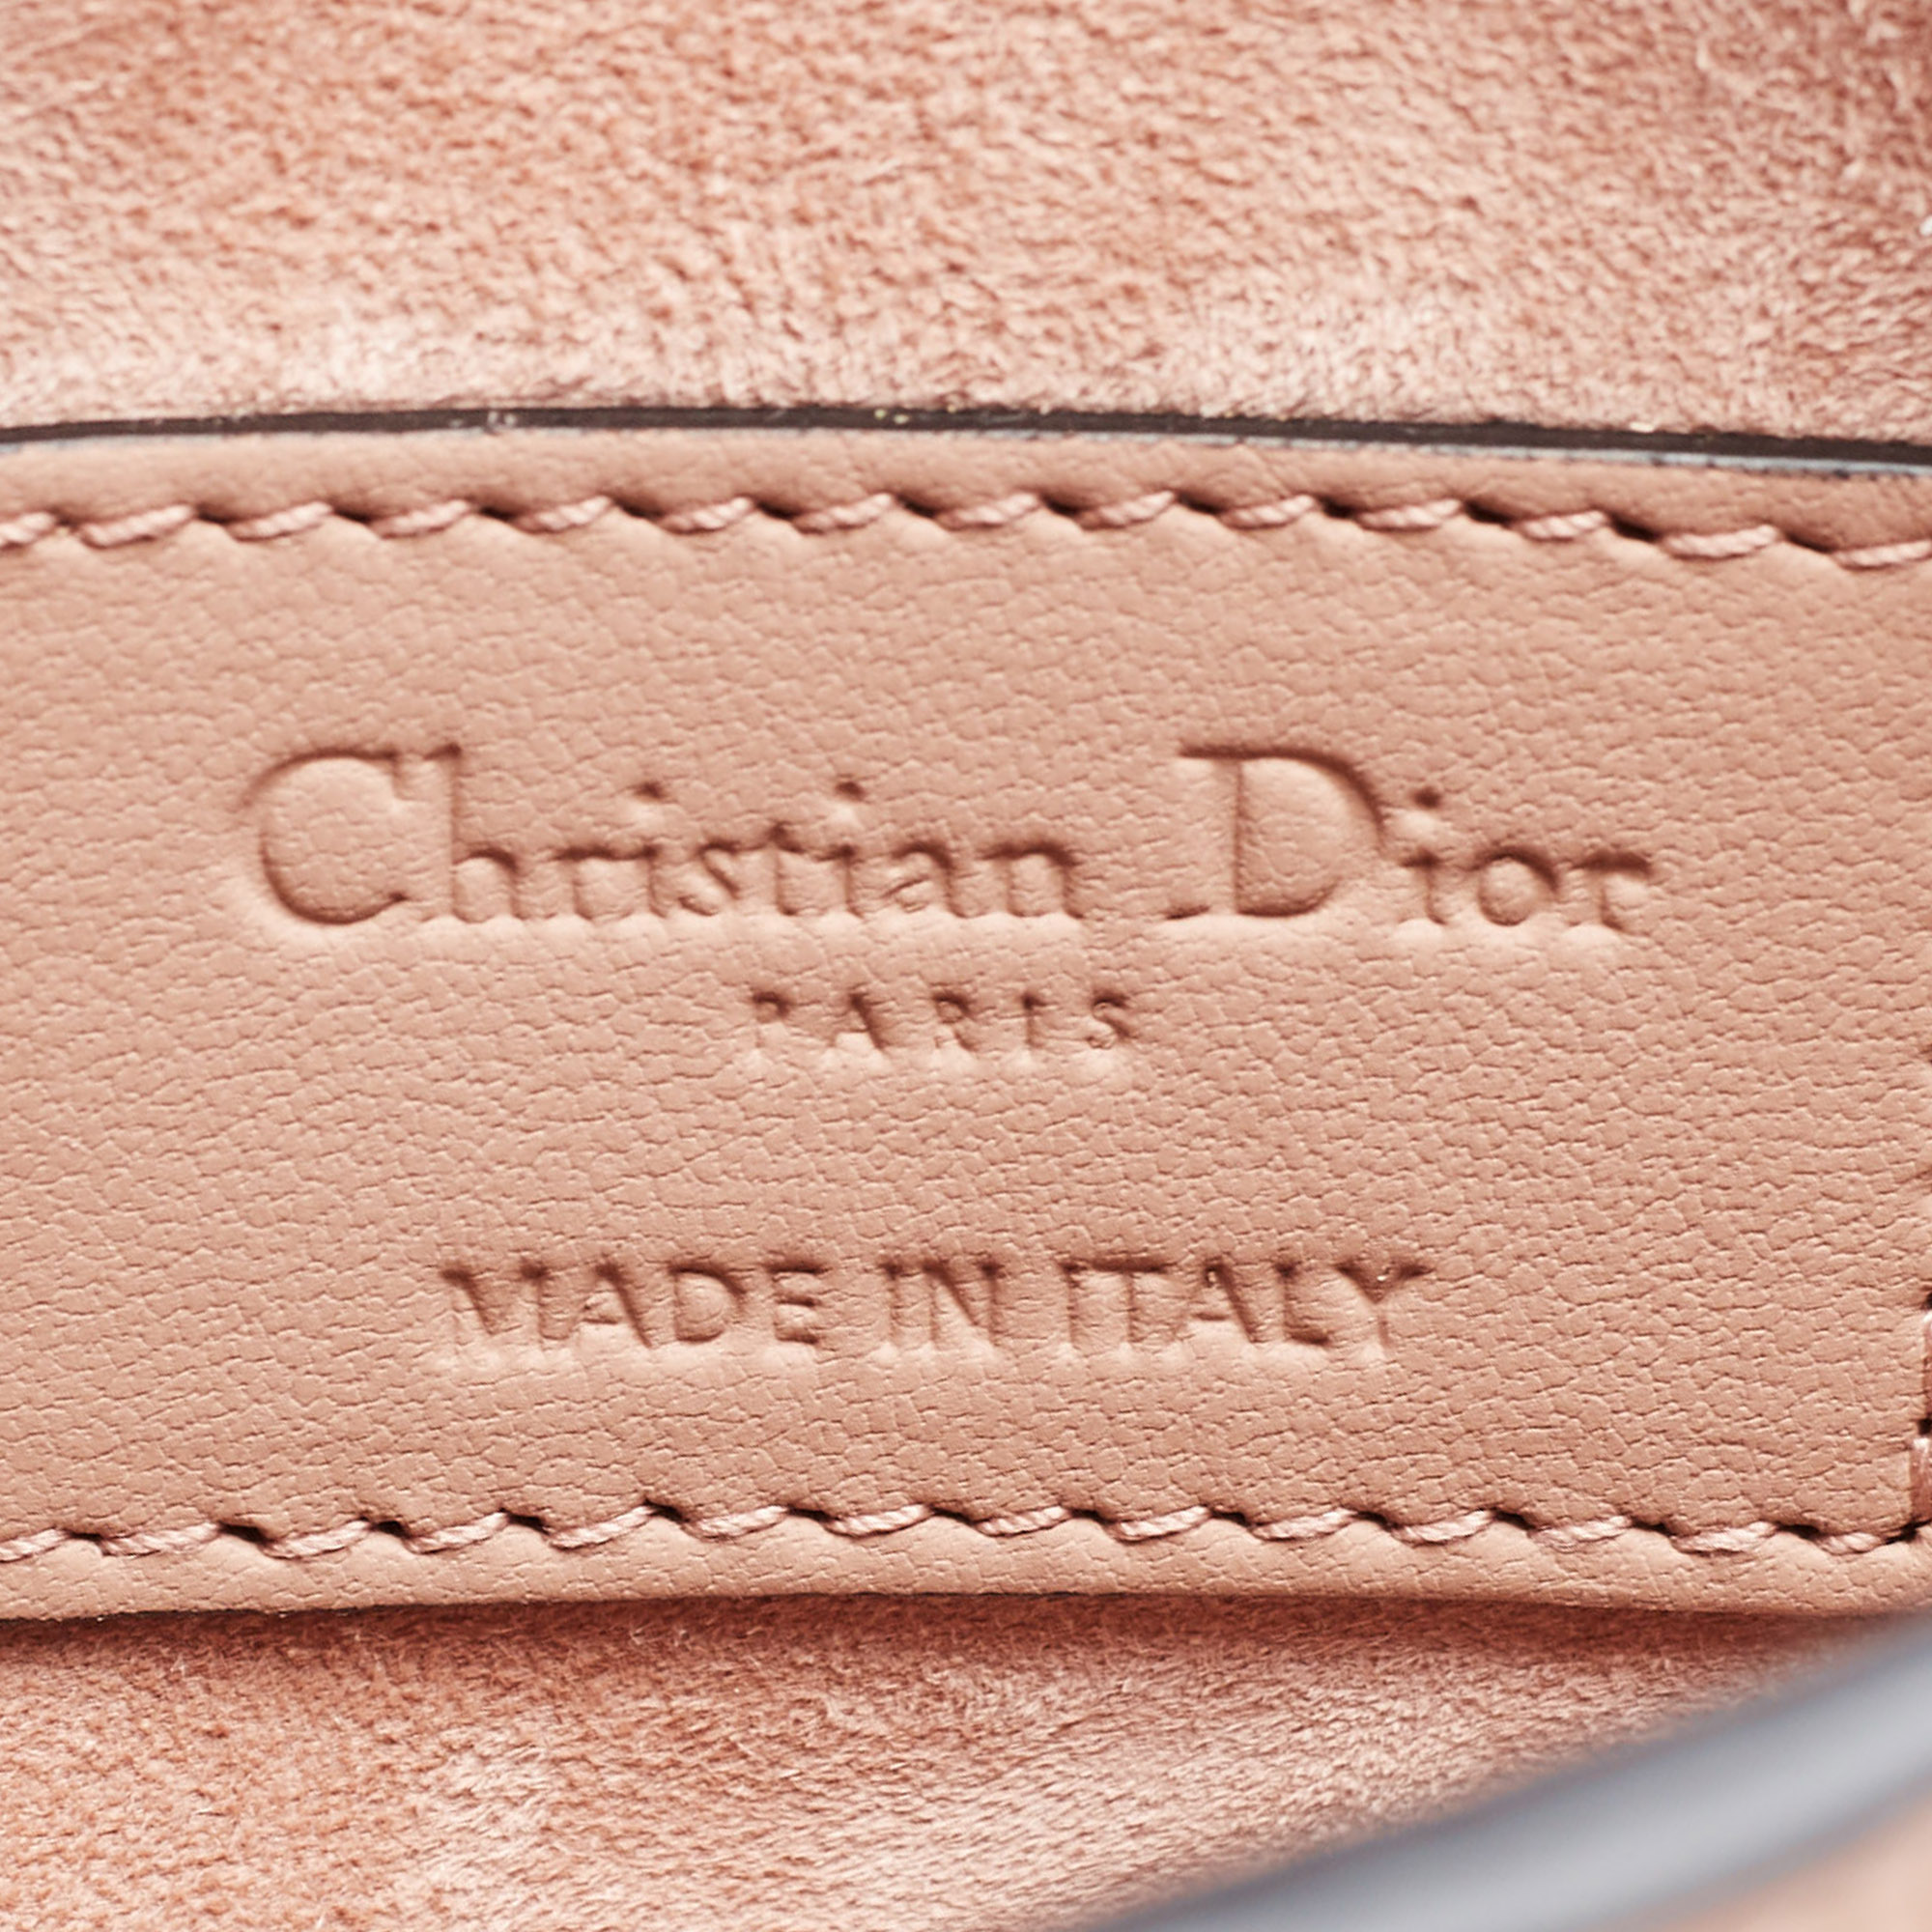 Dior Blush Ultra Matte Leather Saddle Convertible Belt Bag